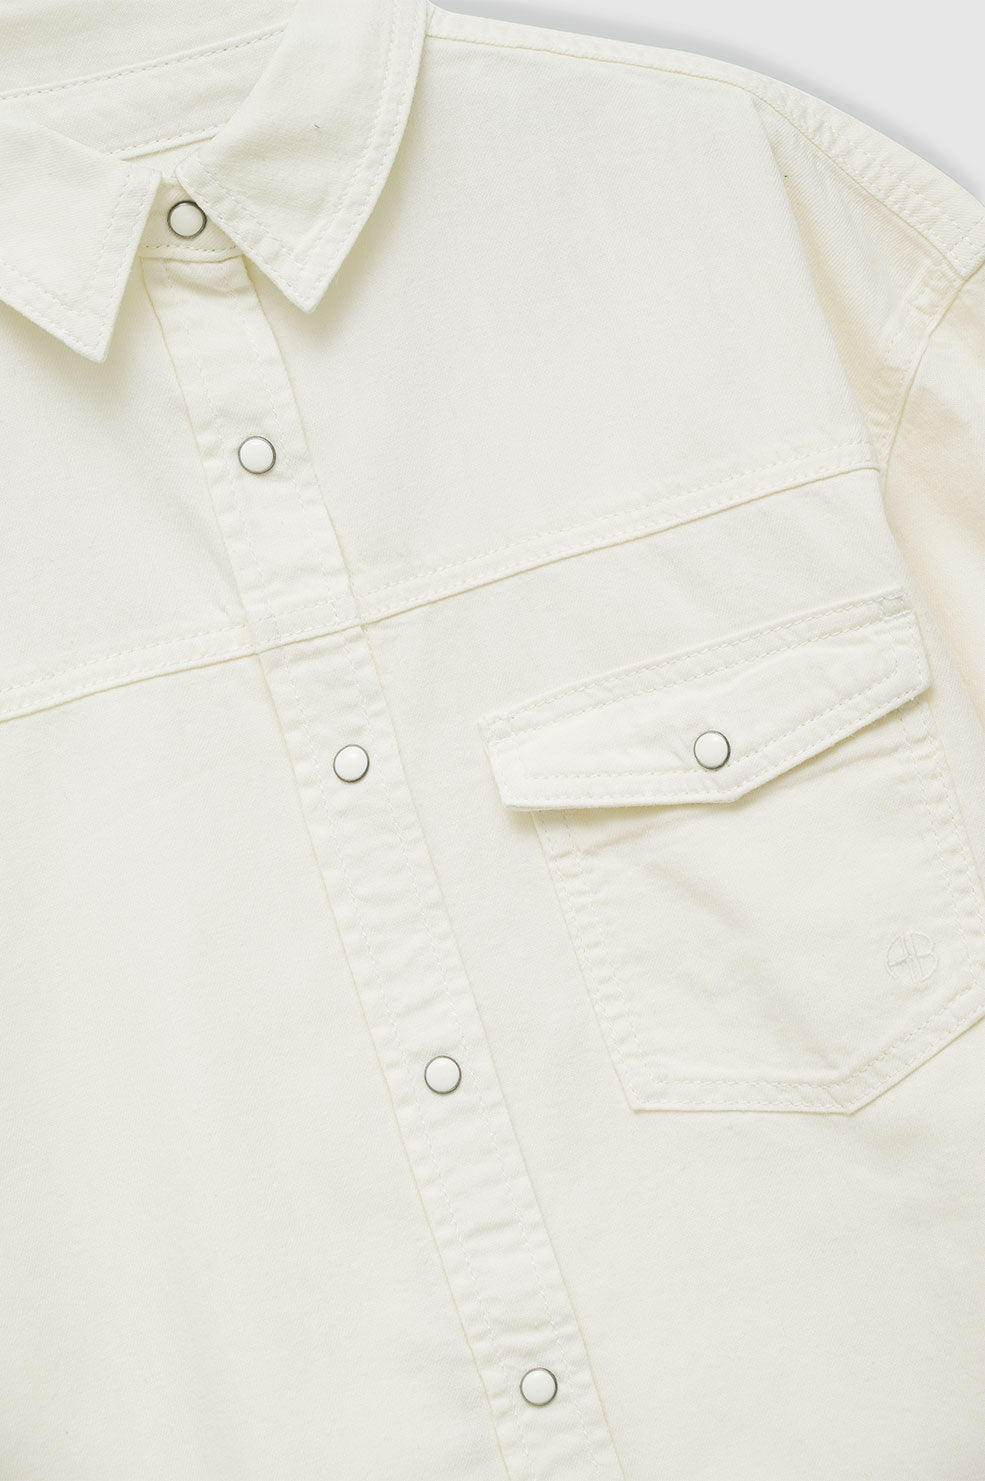 ANINE BING Sloan Shirt - Ivory - Detail View